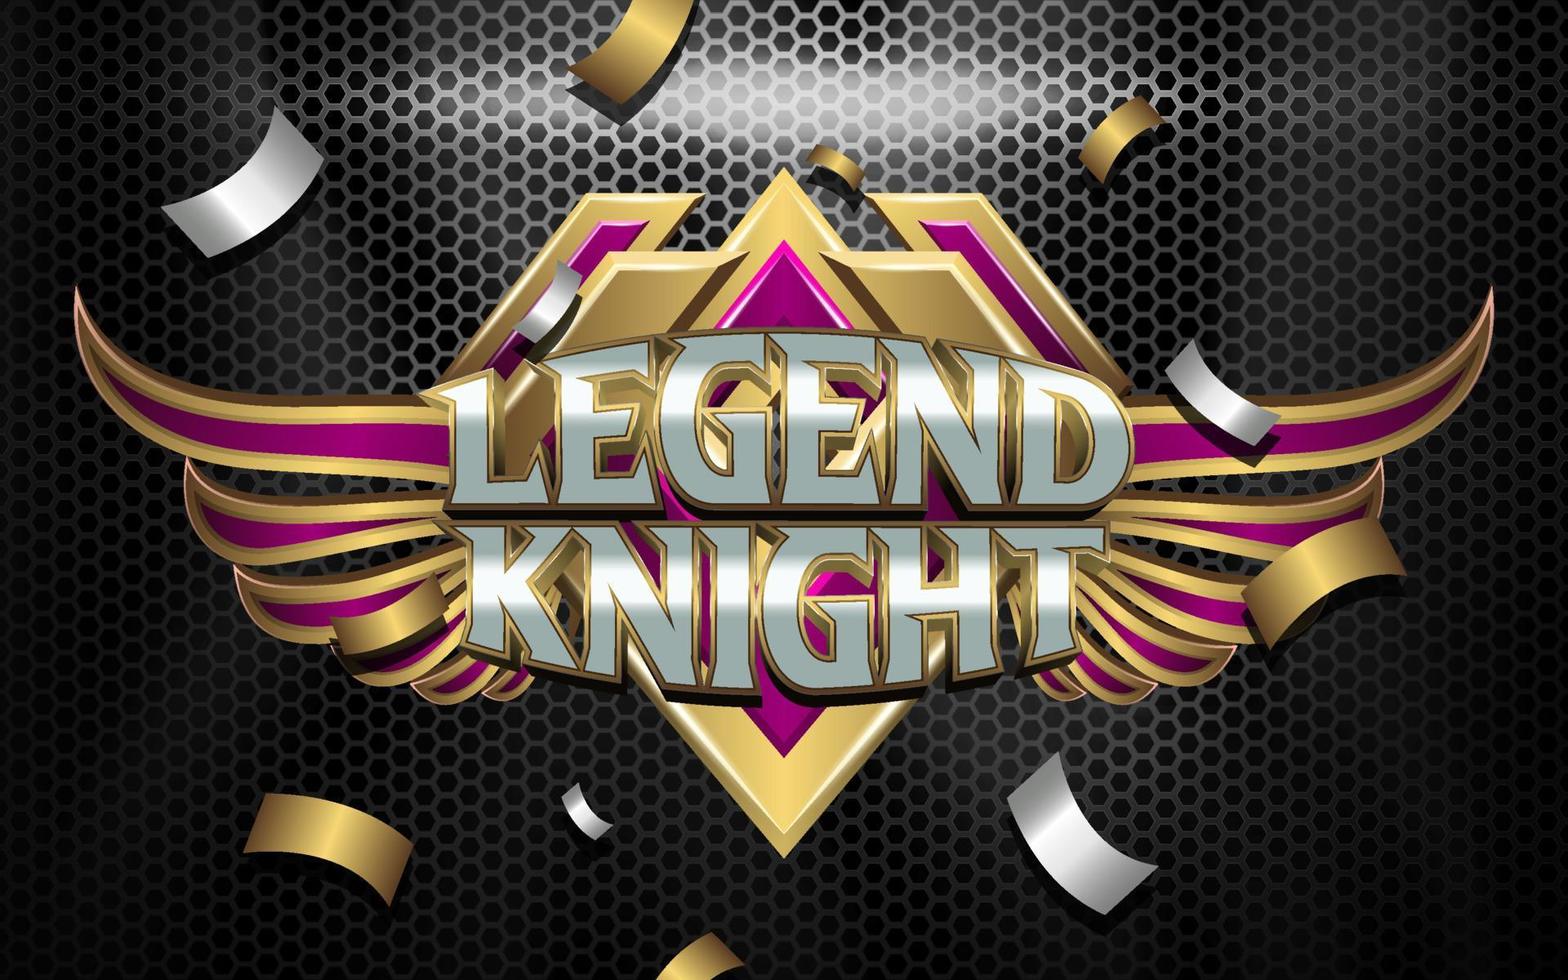 Legend Knight Esport Team Logo 3d Text Effect with Winged Emblem vector